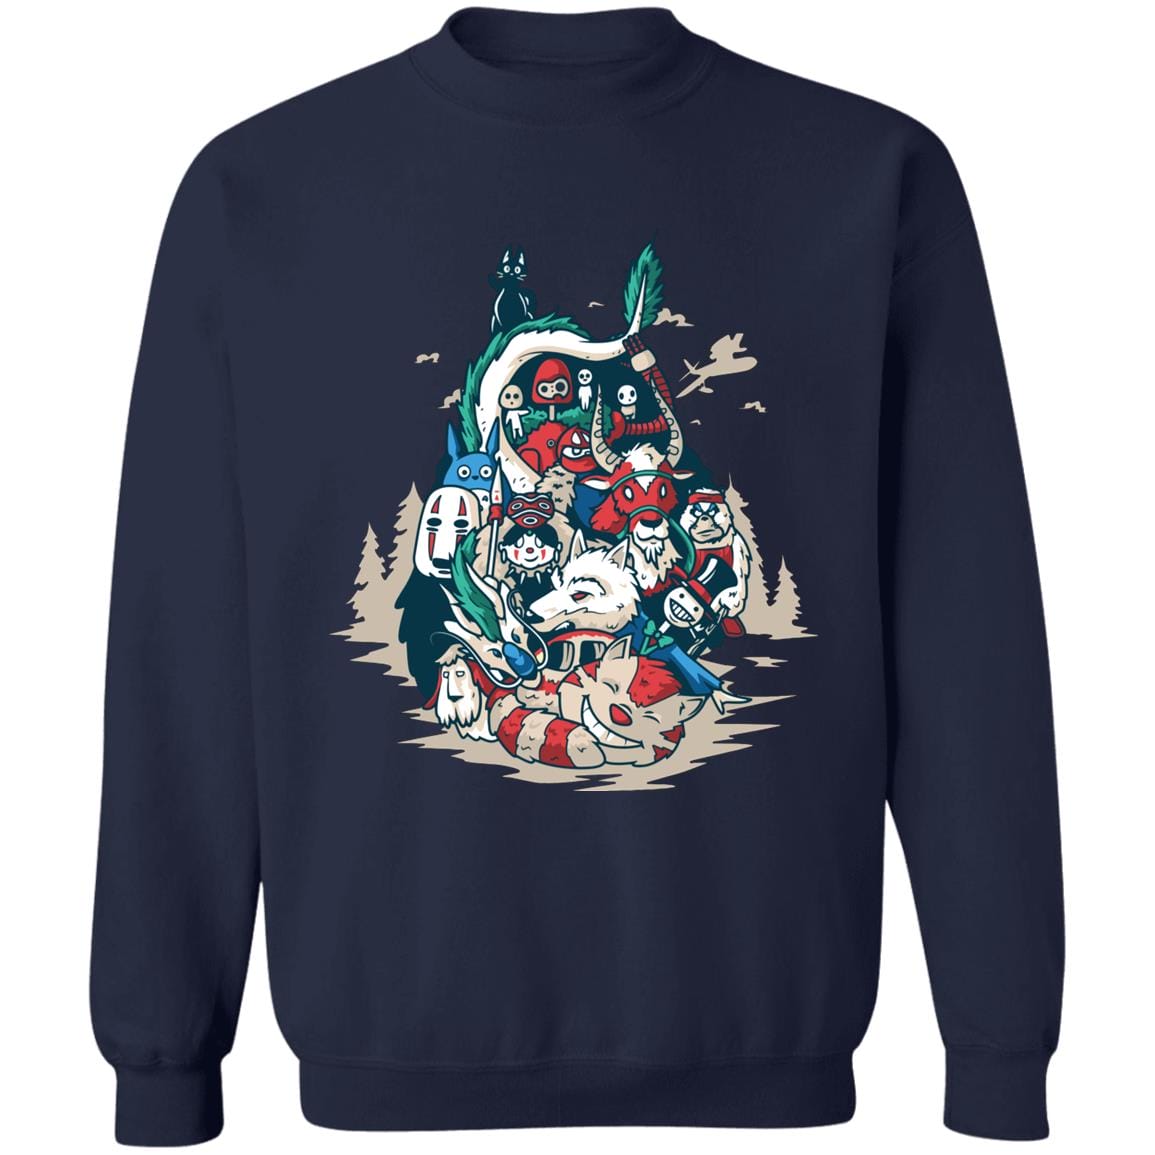 Ghibli universe in Totoro Shape Sweatshirt